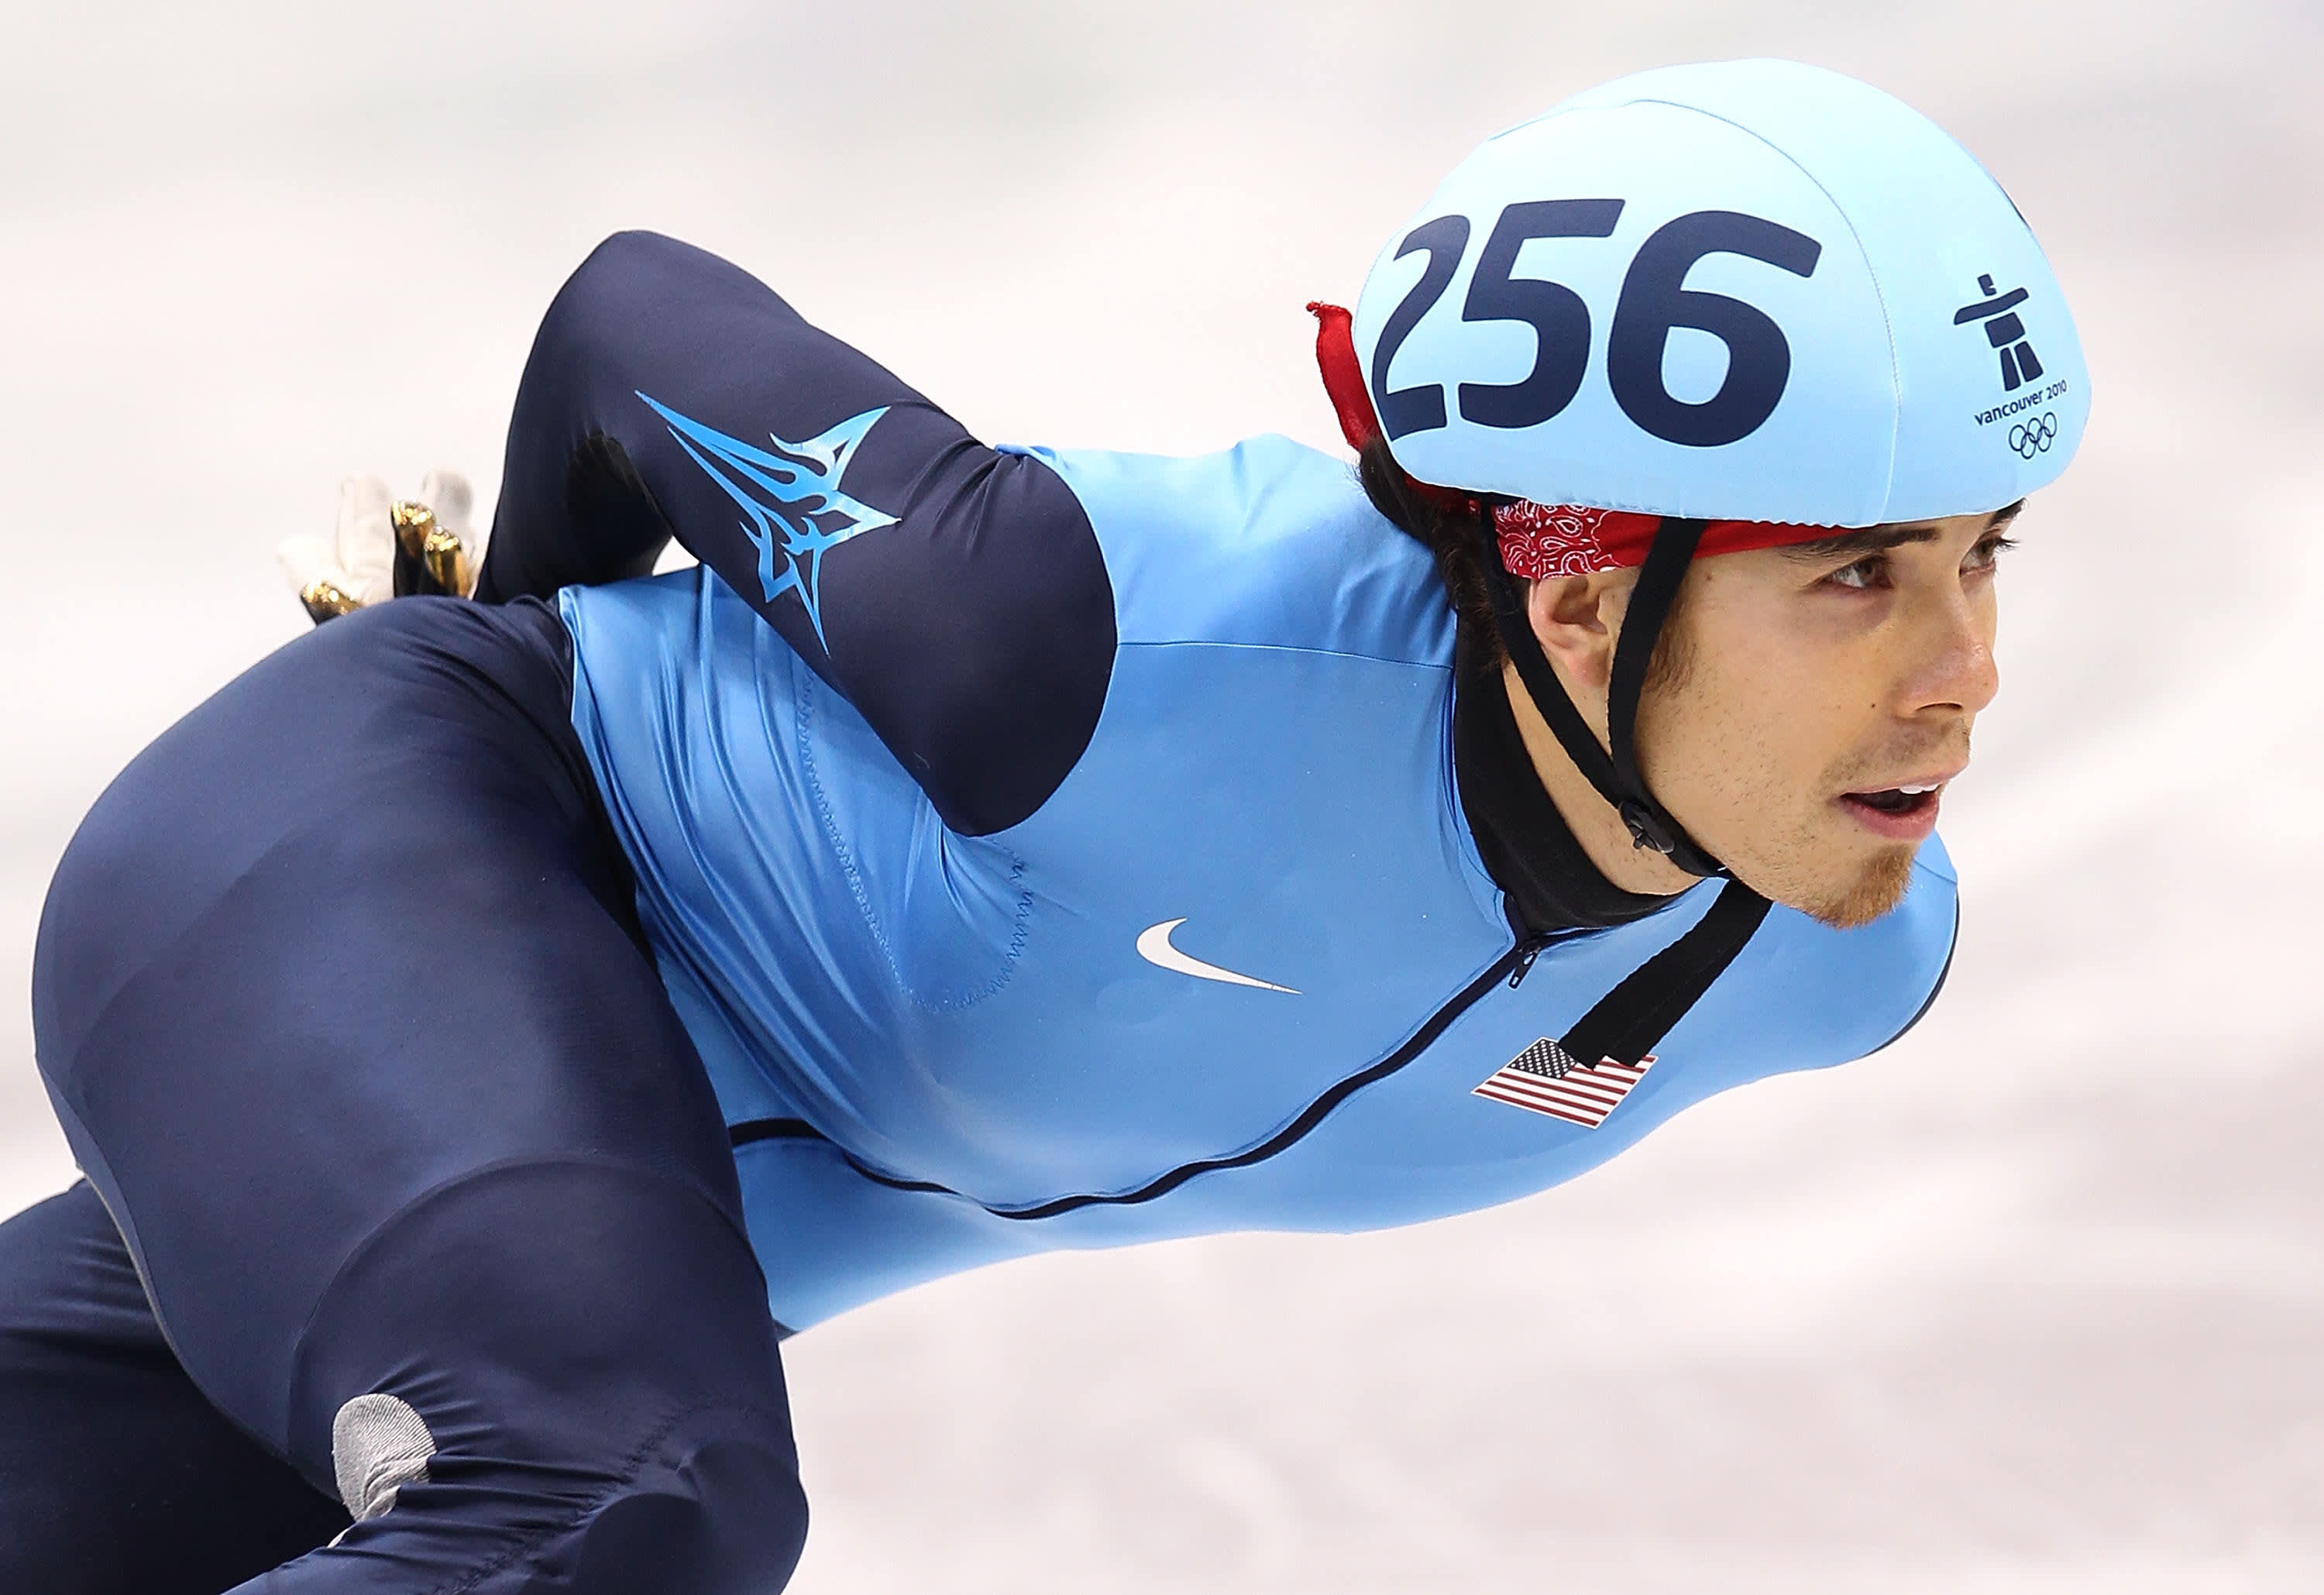 Olympic speed skater Apolo Ohnos career pivots amid Great Resignation